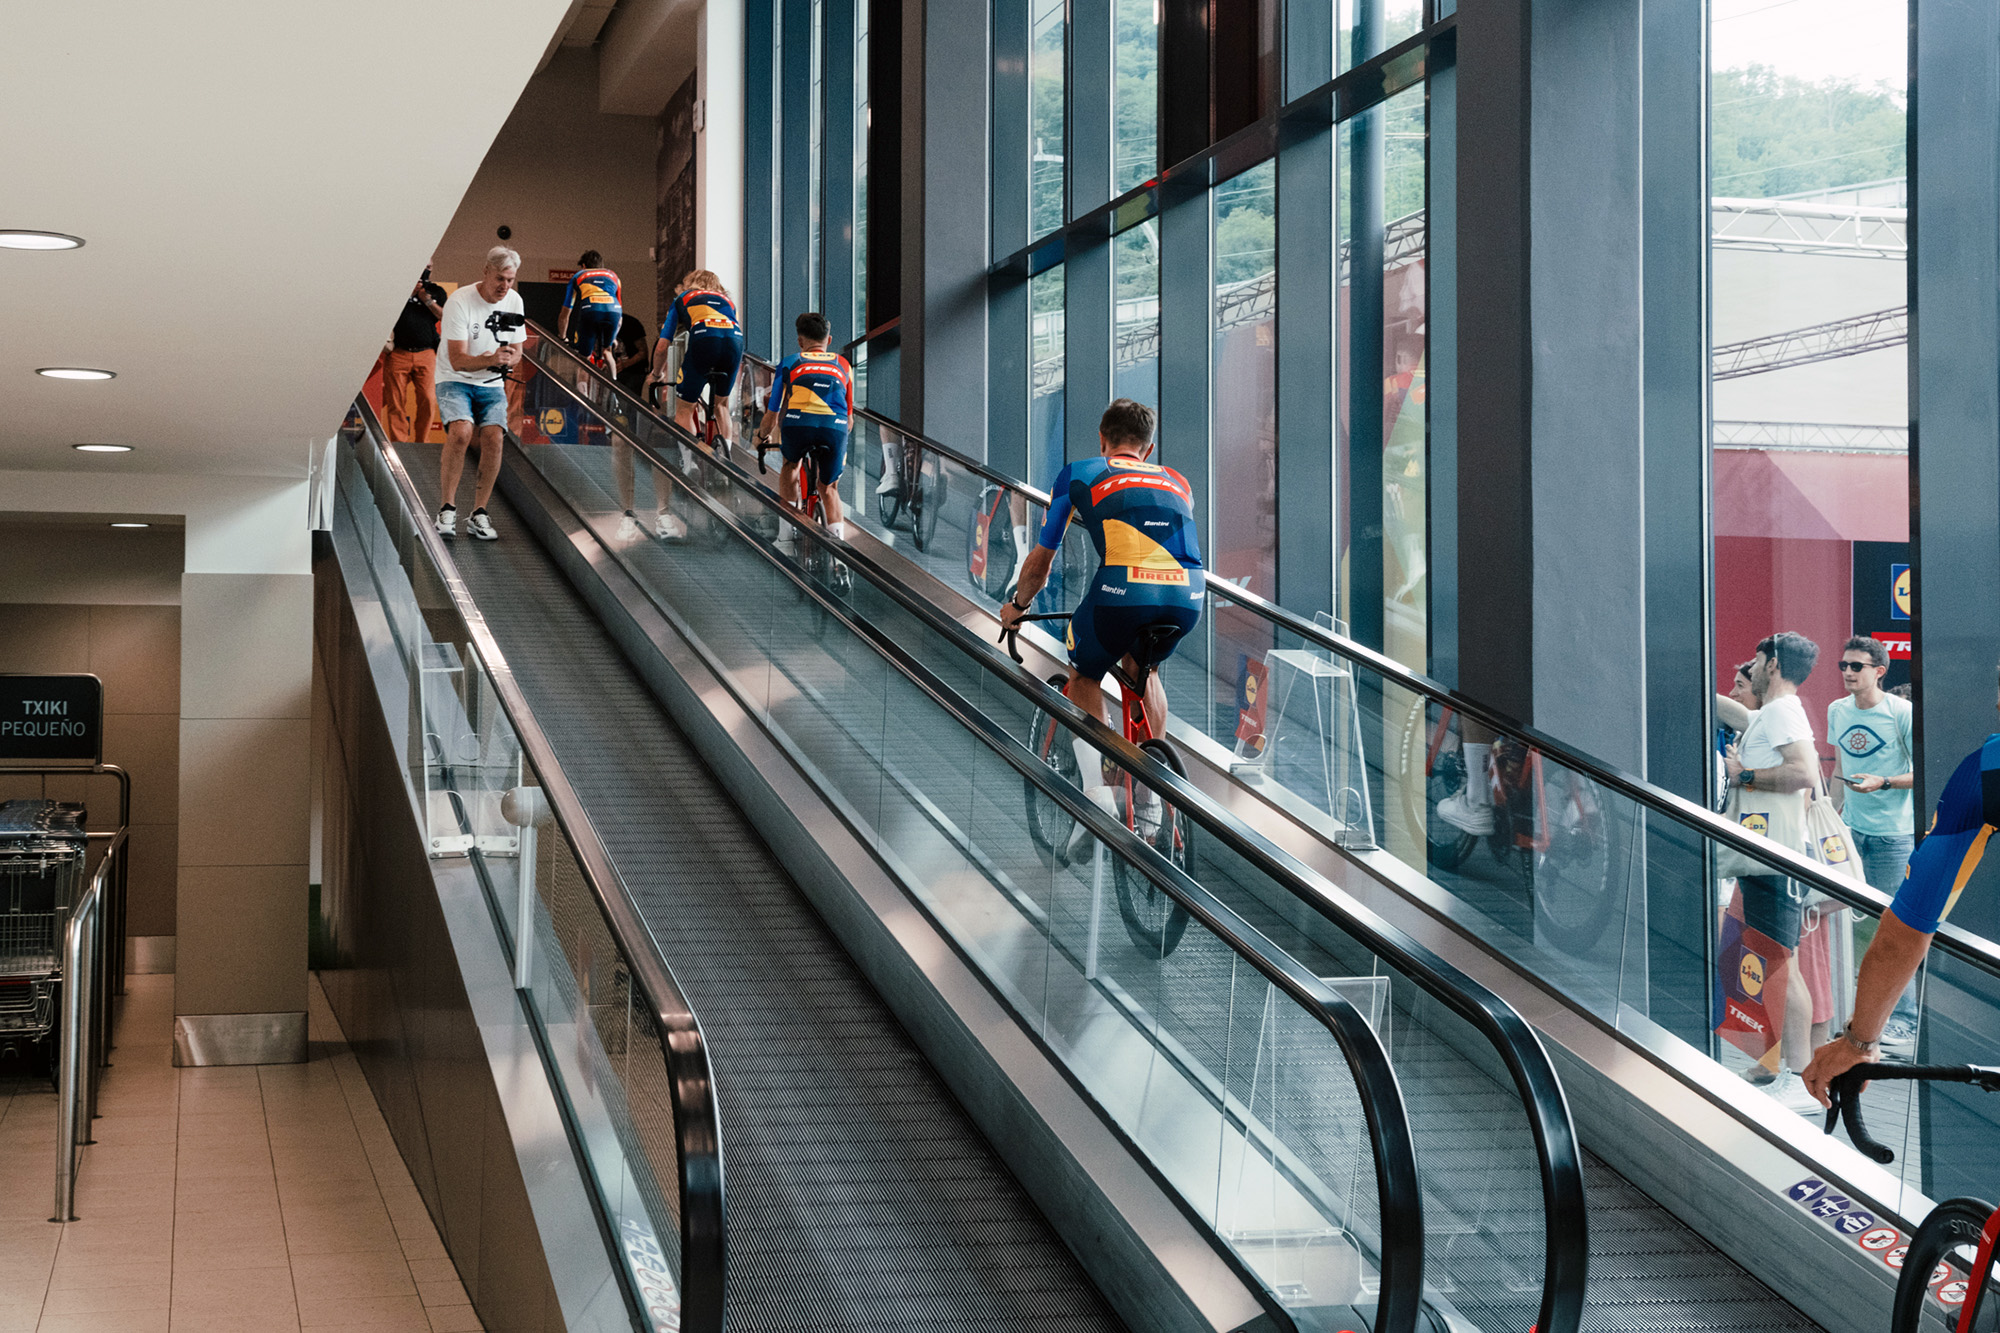 Lidl-Trek riders ride up an escalator in a Lidl supermarket.